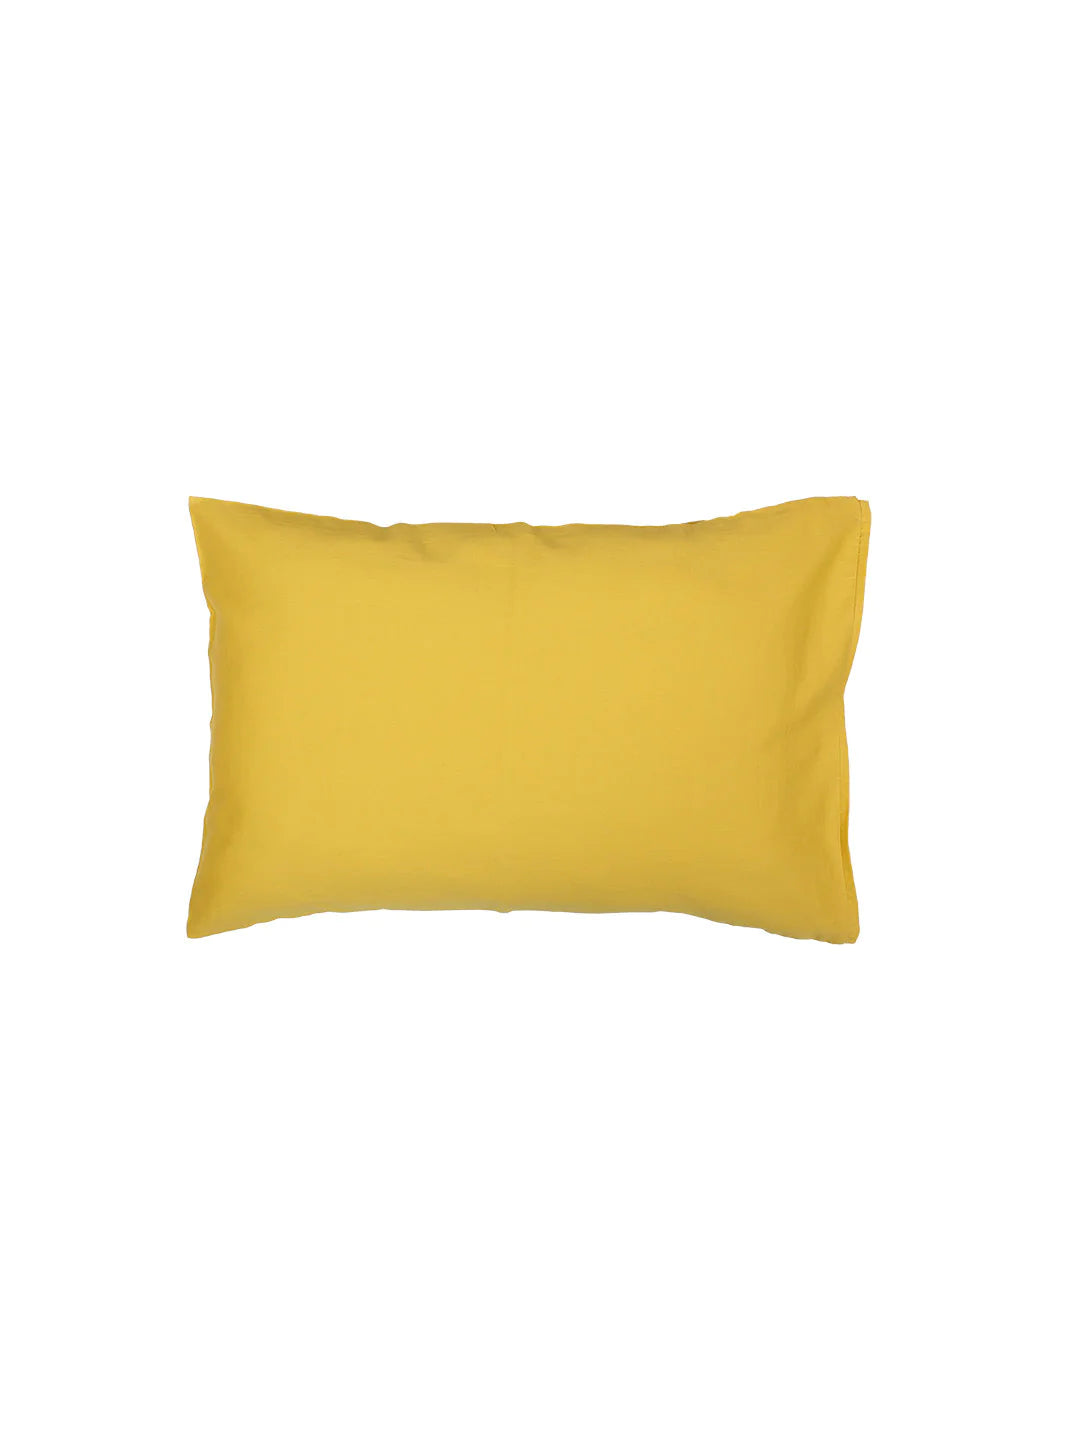 Piyambu Yellow Bedsheet with Pillow Cover